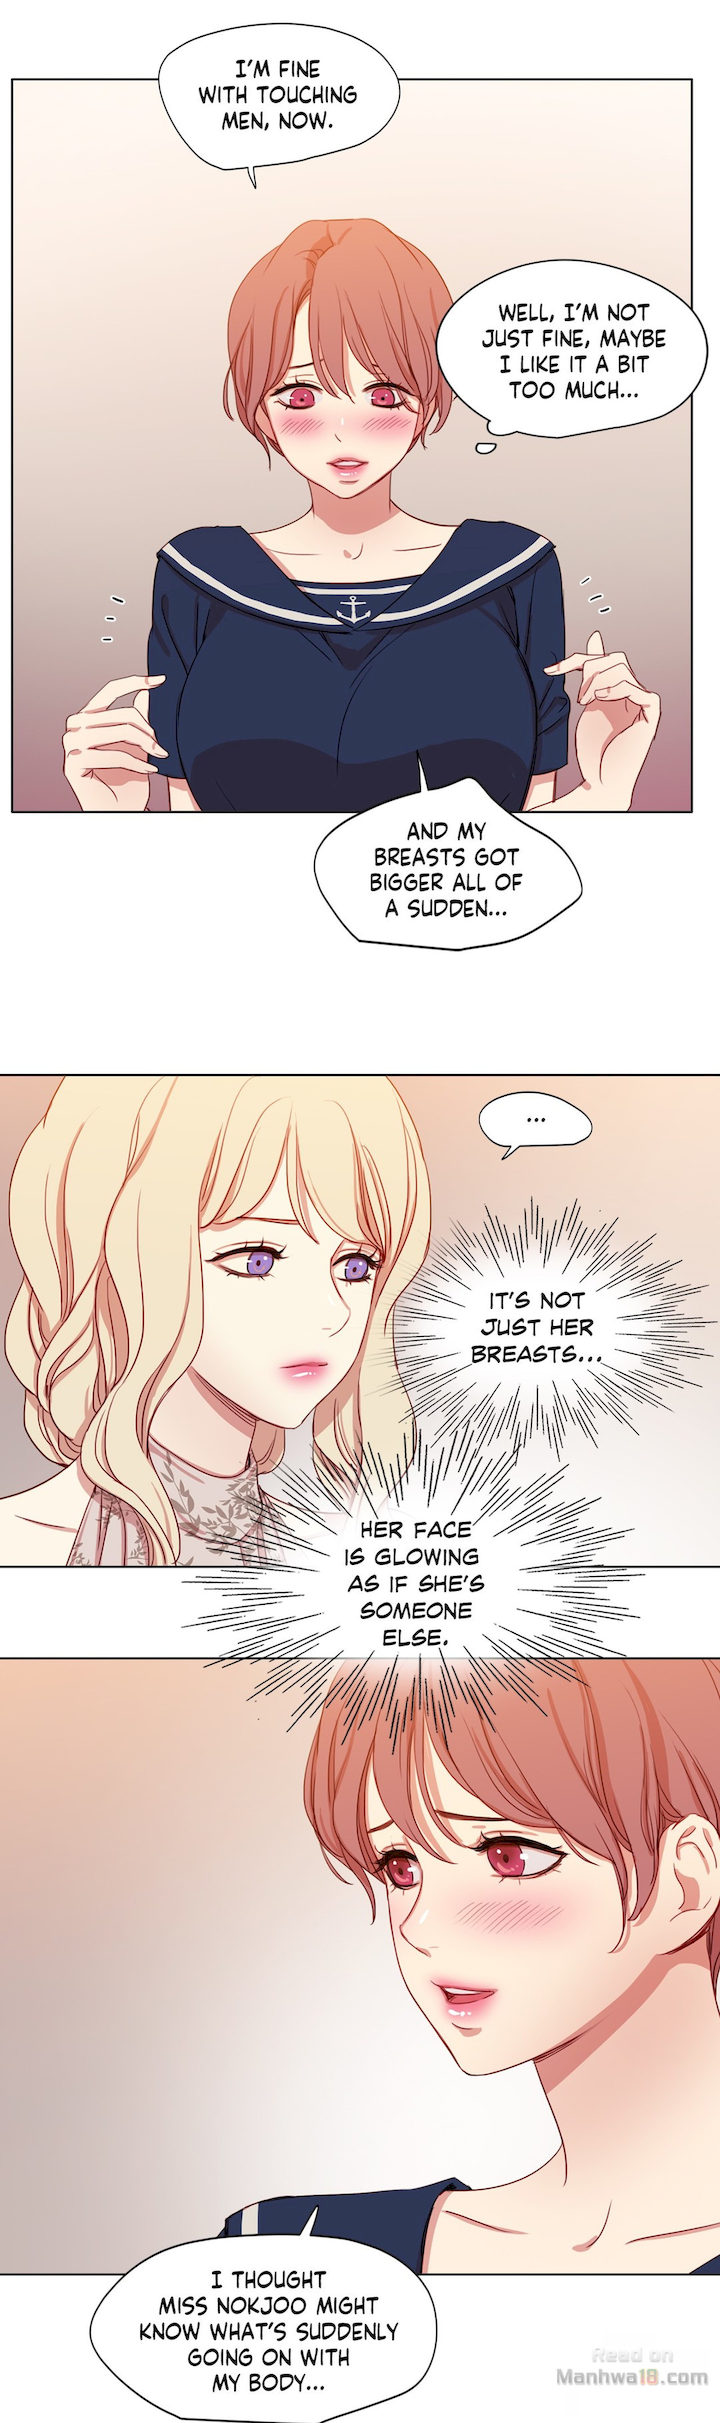 Narae’s Fantasy - Chapter 22 Page 12